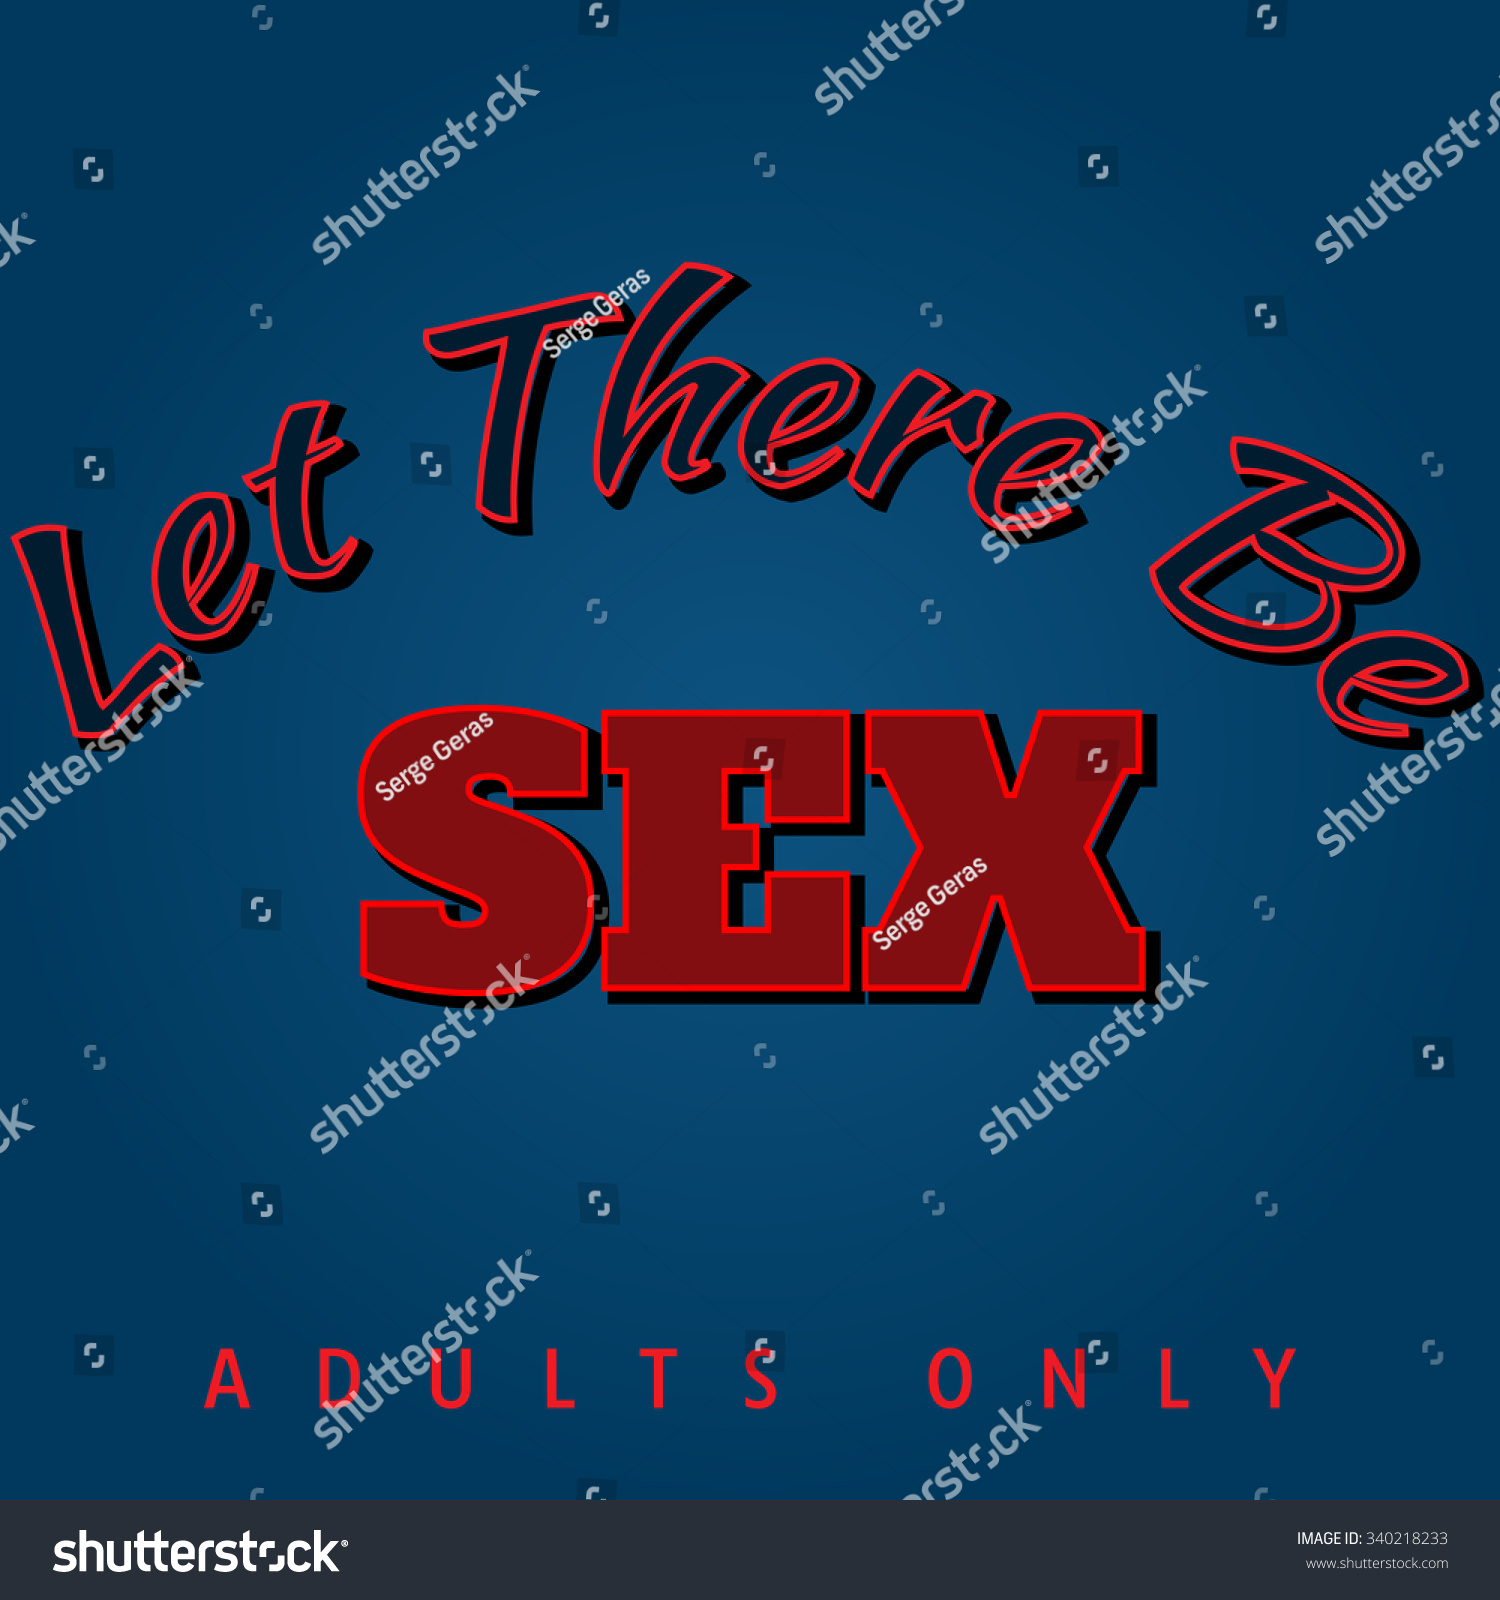 Vector Illustration On Theme Sex Slogan เวกเตอร์สต็อก ปลอดค่าลิขสิทธิ์ 340218233 Shutterstock 